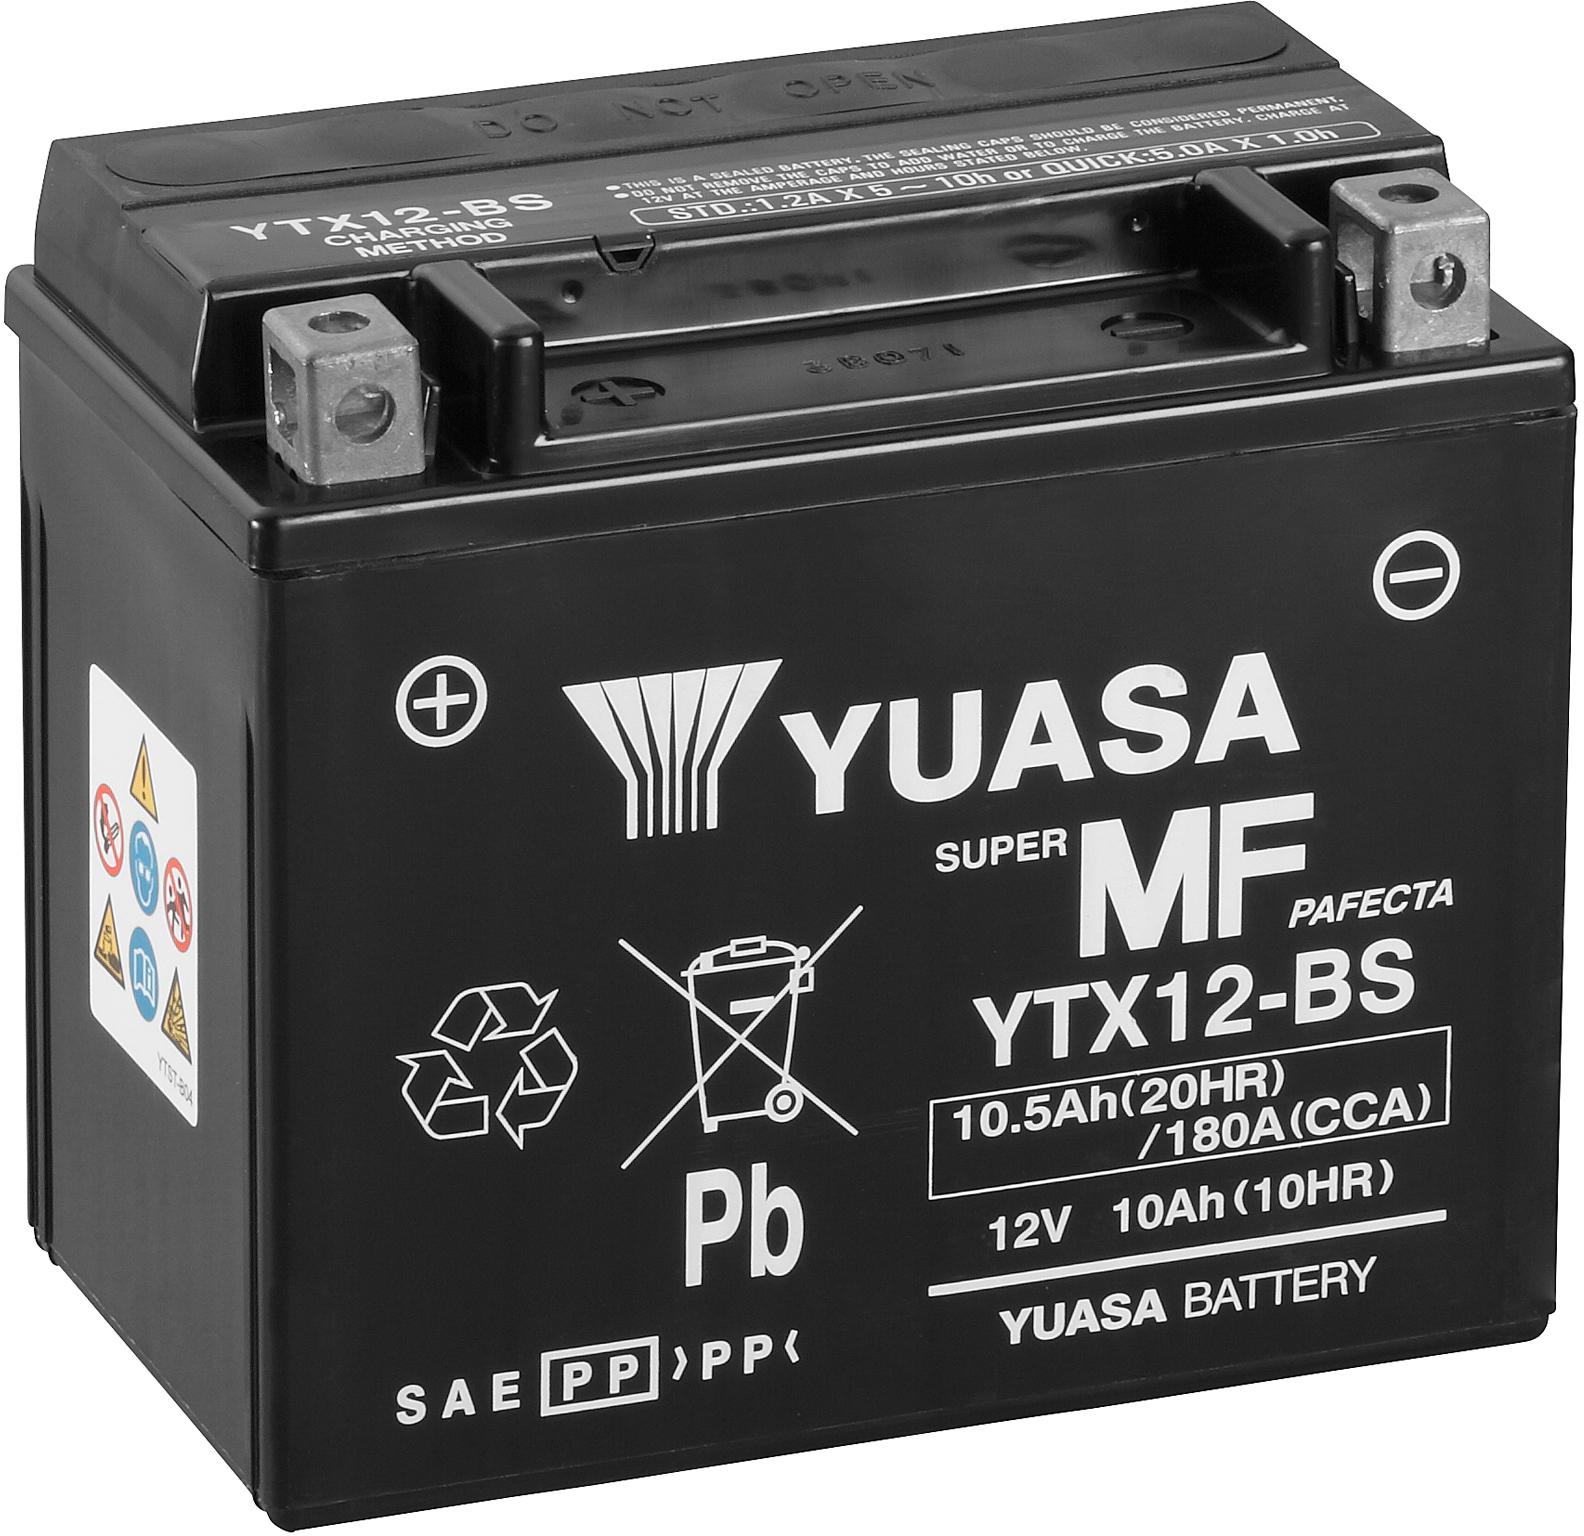 Yuasa Ytx12-Bs Maintenance Free Motorcycle Battery